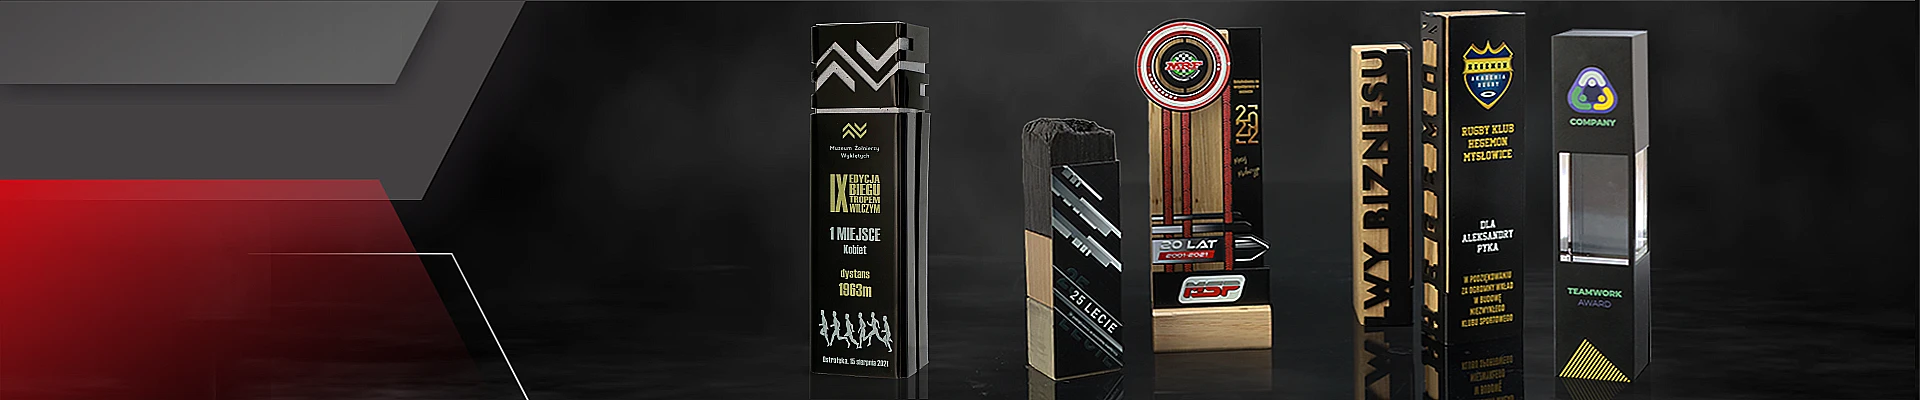 Column awards made from various materials